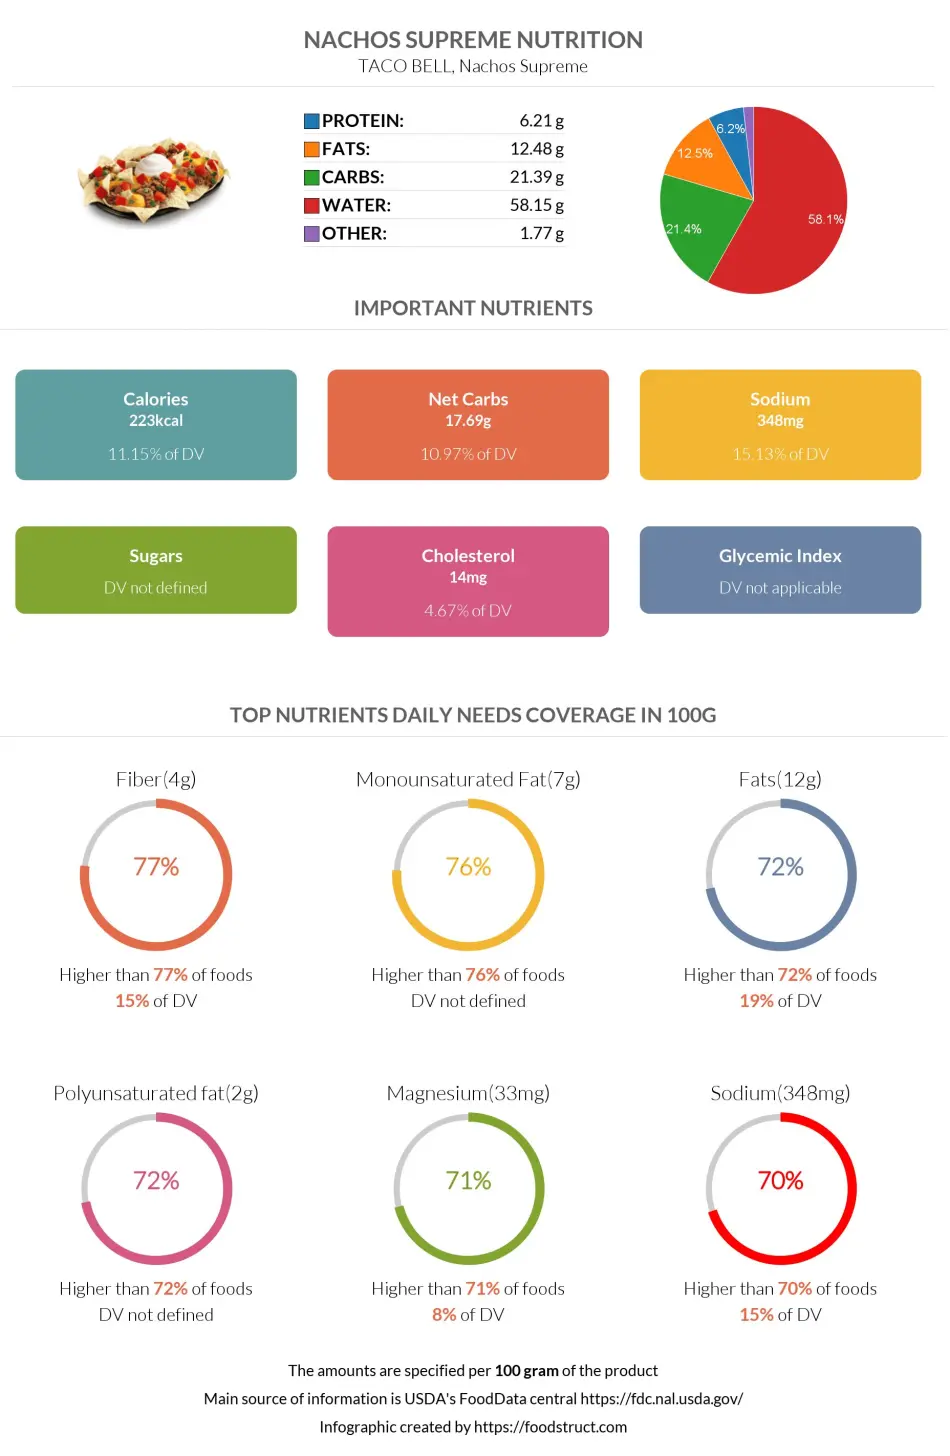 Nachos Supreme nutrition infographic